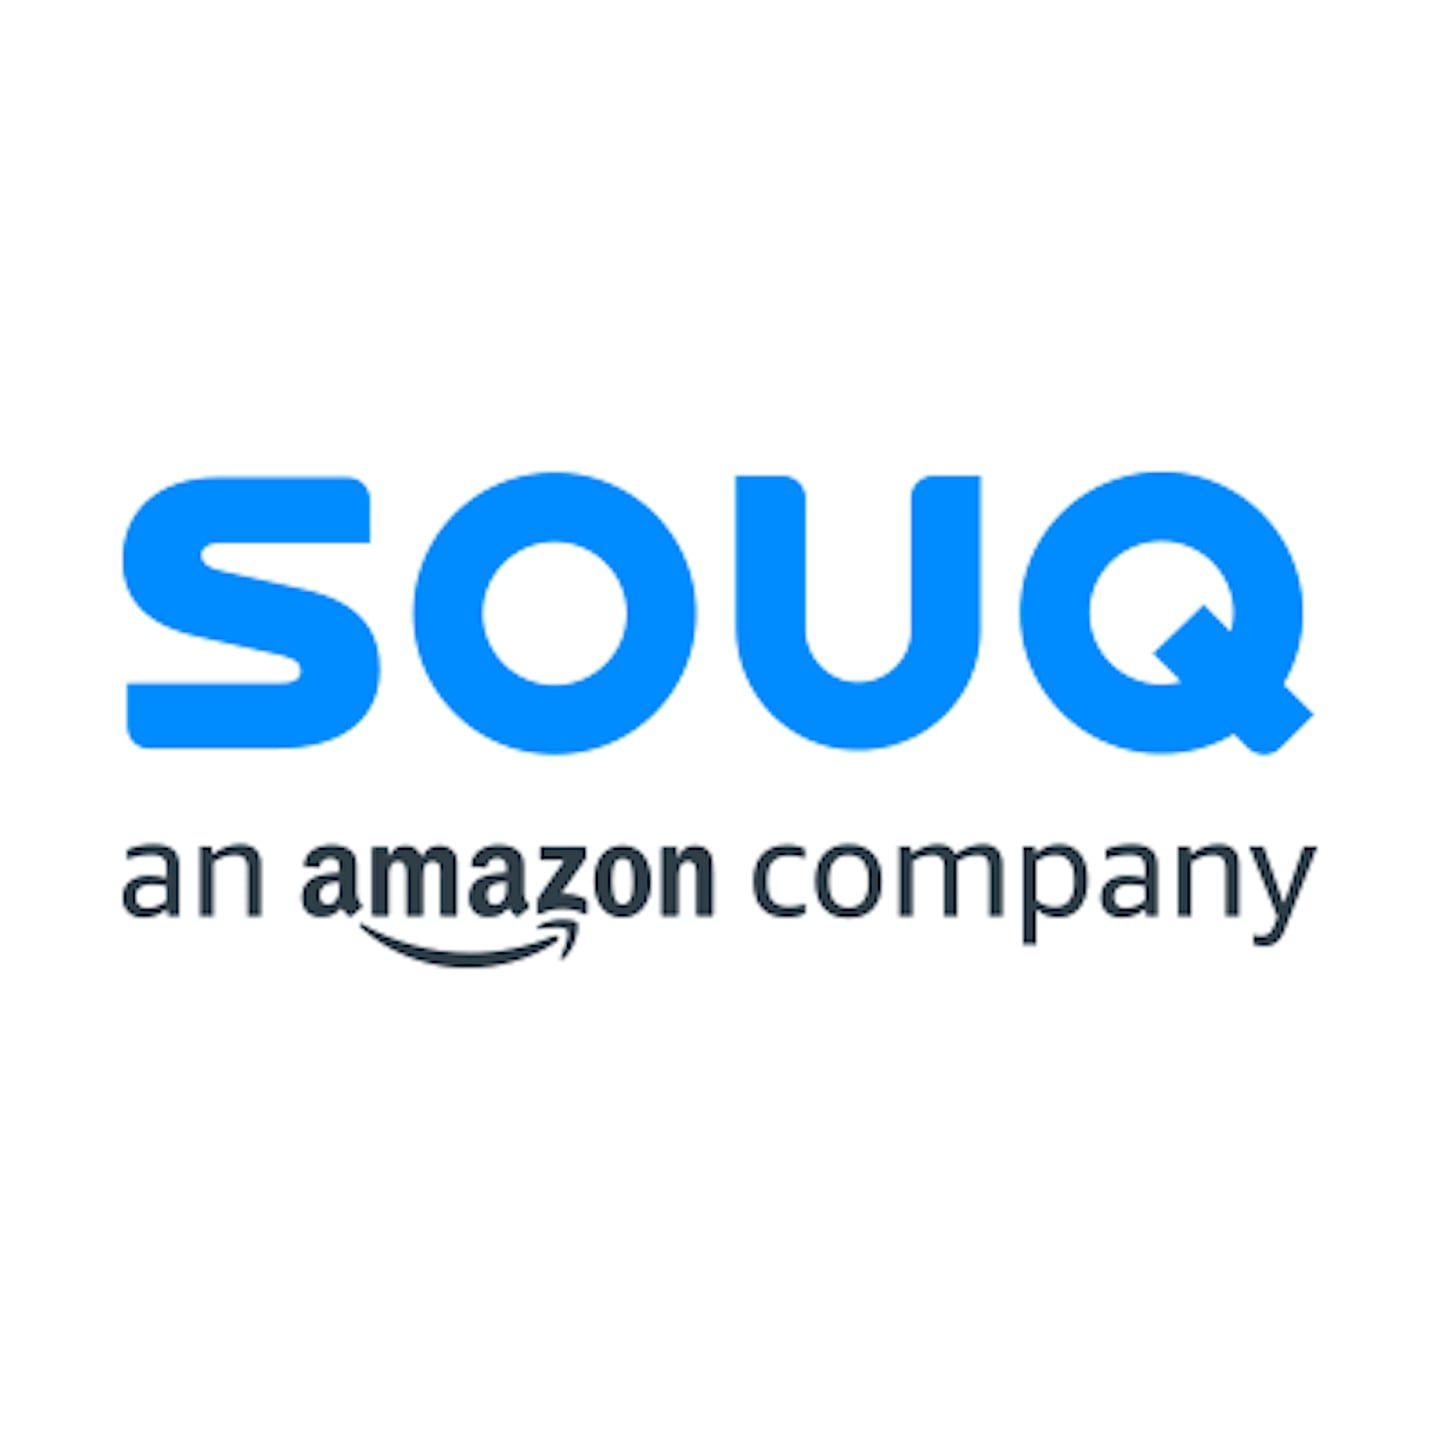 Amazon Company Logo - Souq.com and Amazon | POPSUGAR Middle East Smart Living